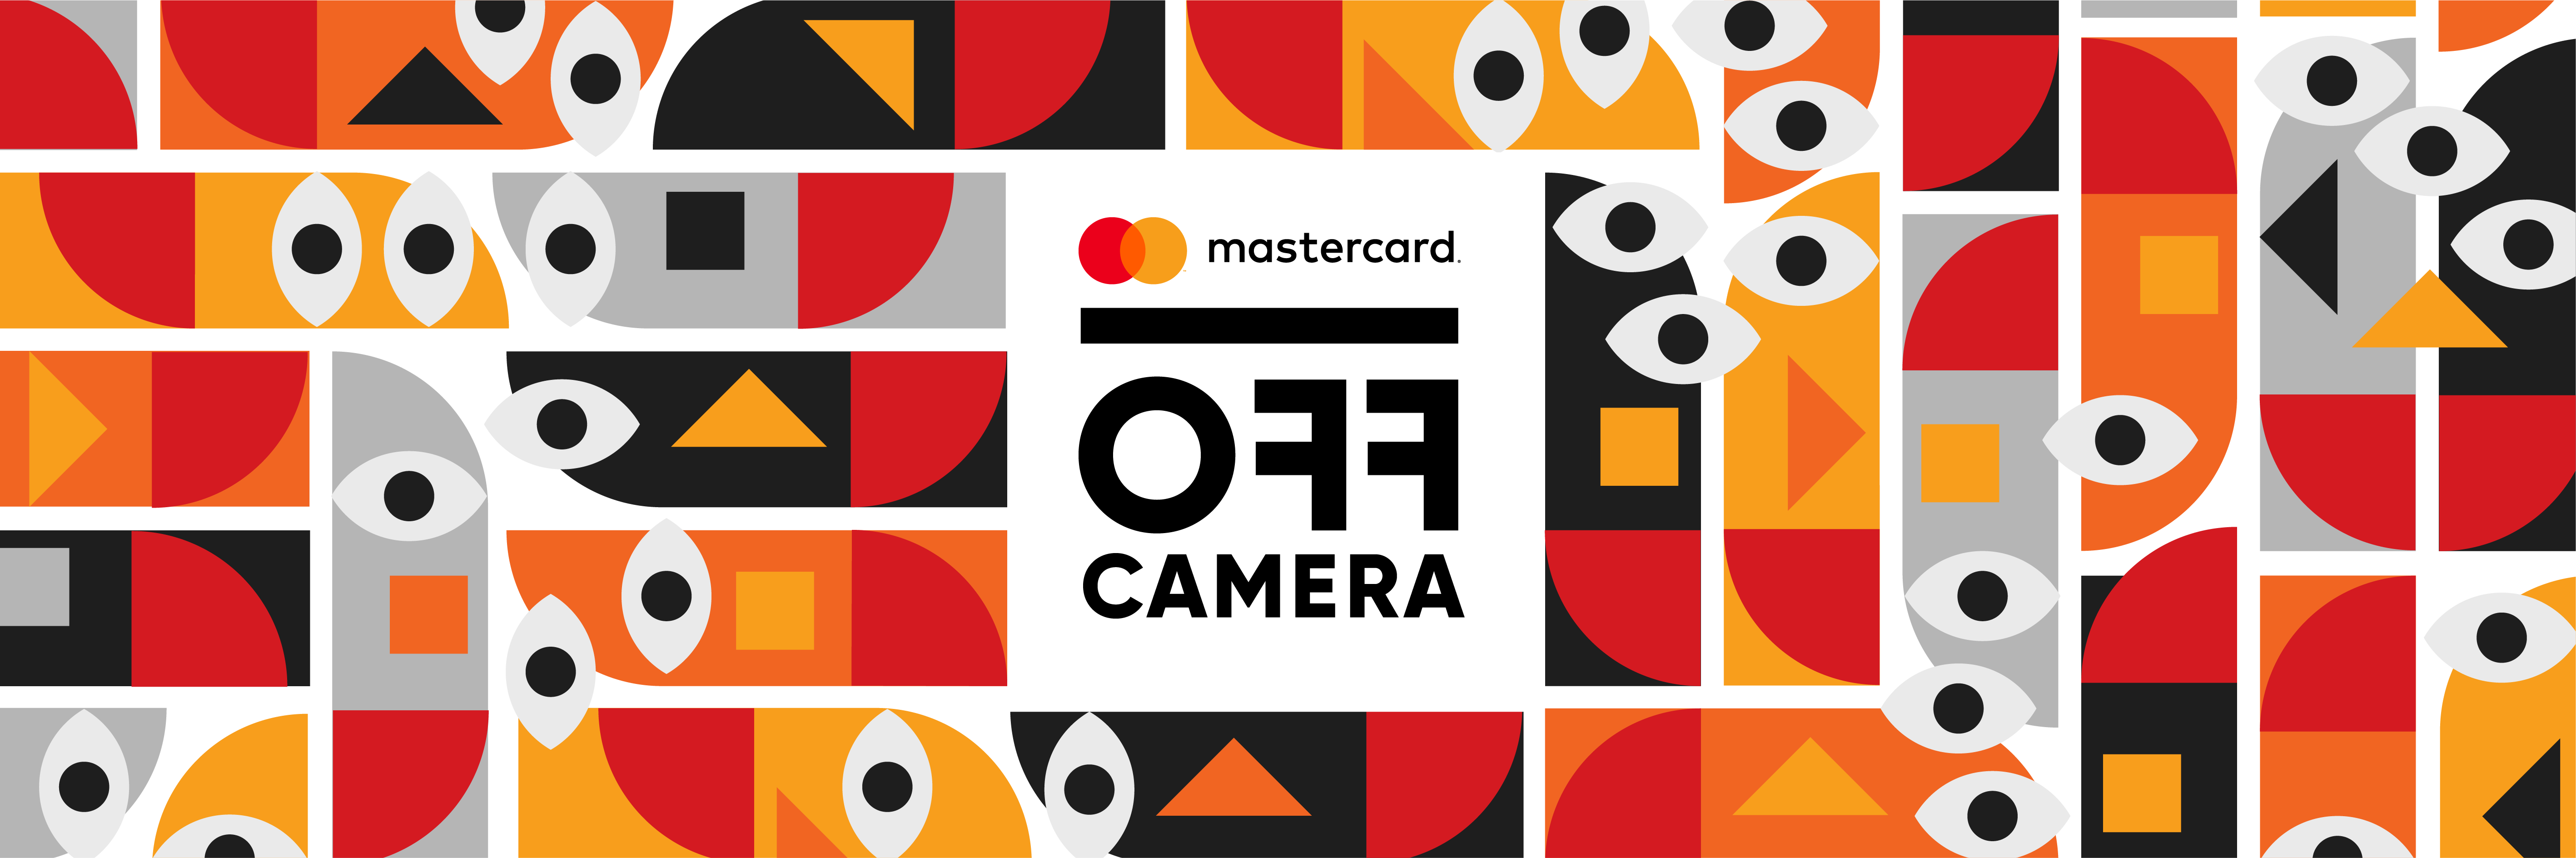 Mastercard OFF CAMERA logo